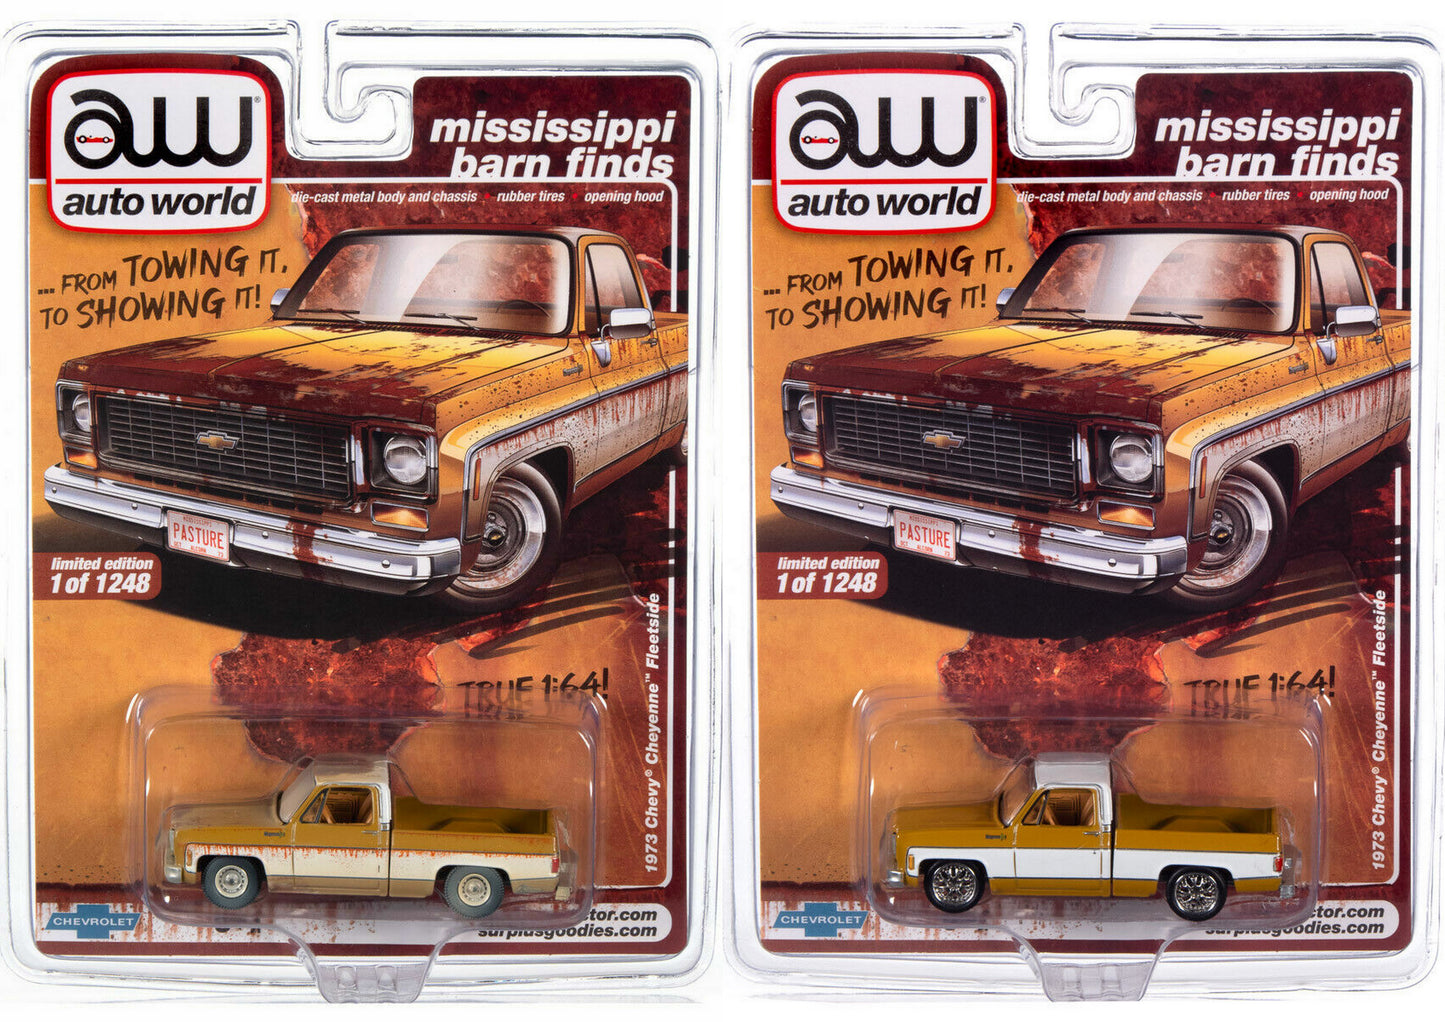 Auto World Mississippi Barn Finds 1973 Chevy Cheyenne Fleetside Pair Clean & Weathered 1:64